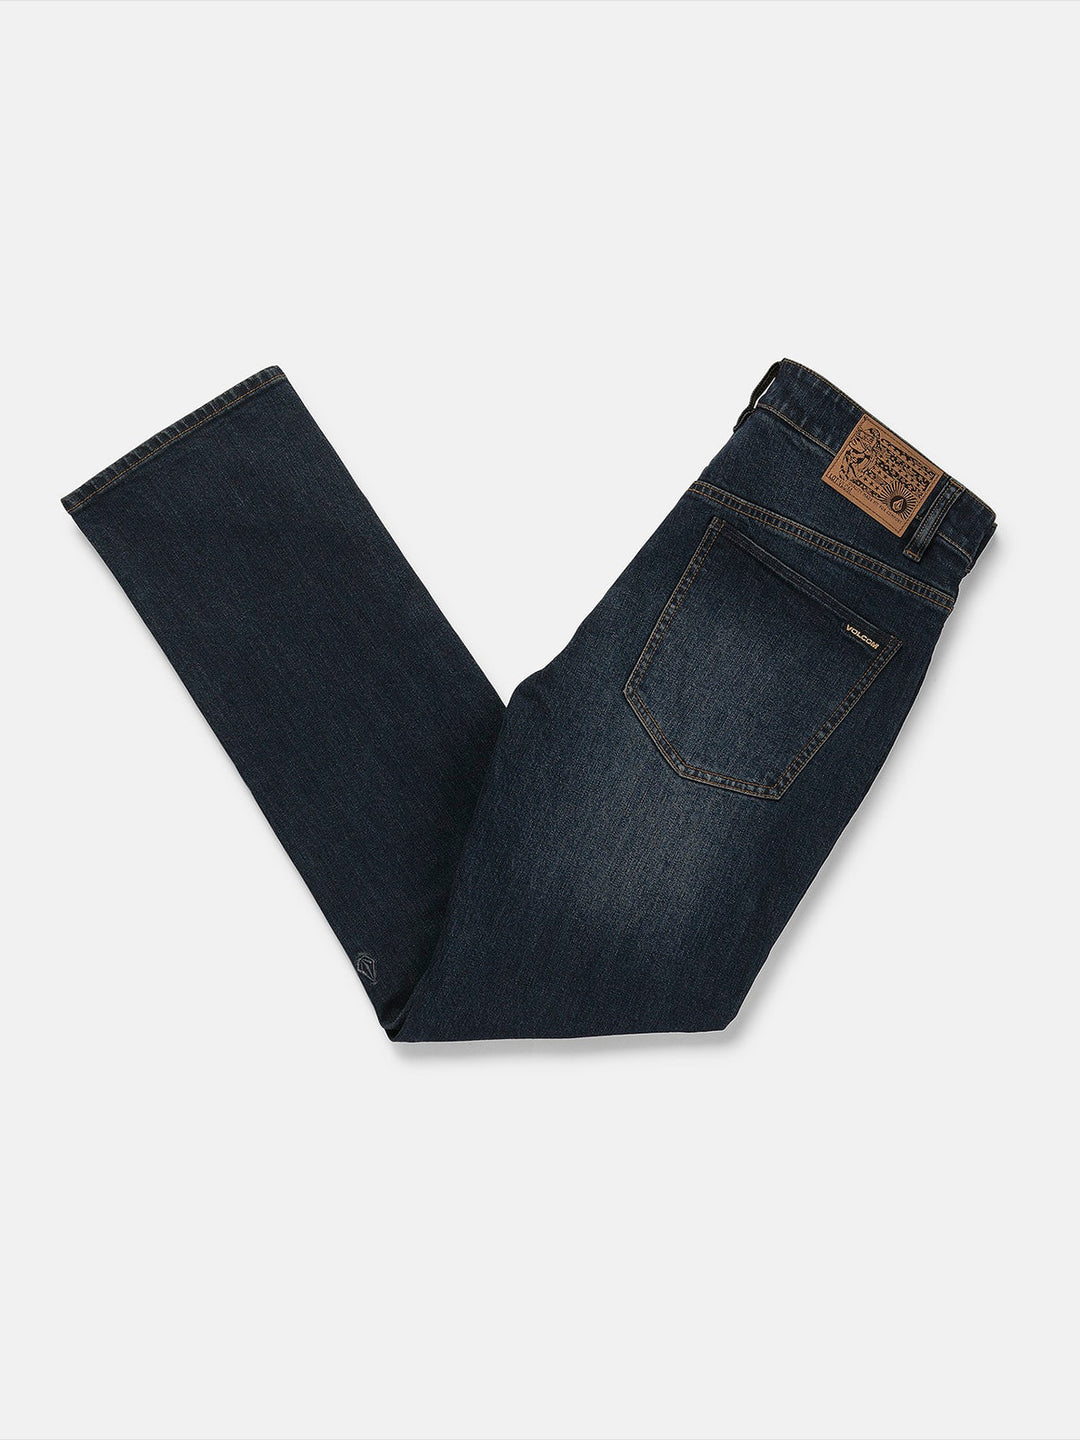 Volcom Solver Modern Fit Jeans - New Vintage Blue - Sun Diego Boardshop